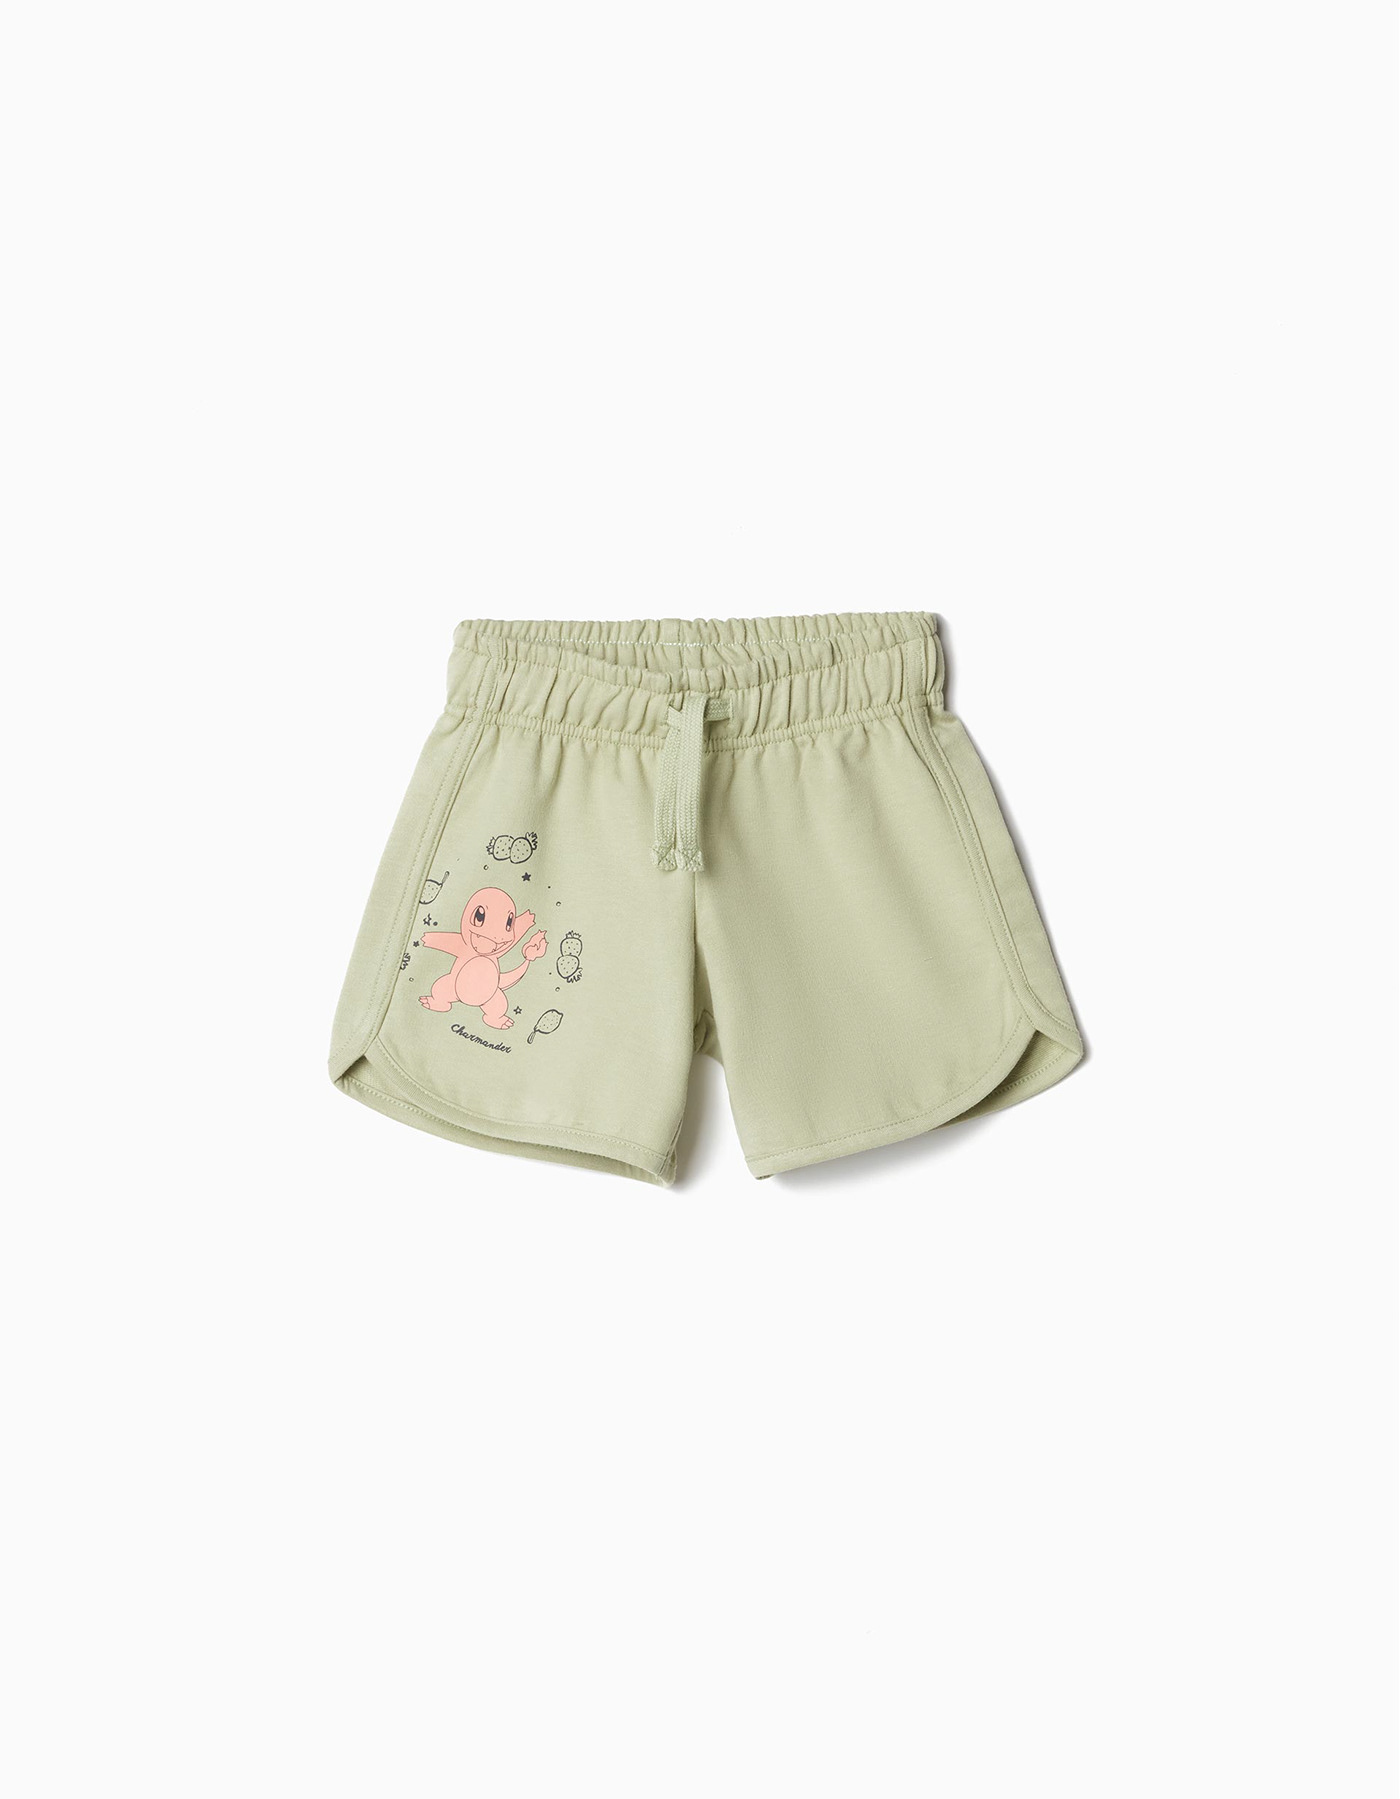 MØ shorts girl Pokemon Charmander print kids apparel